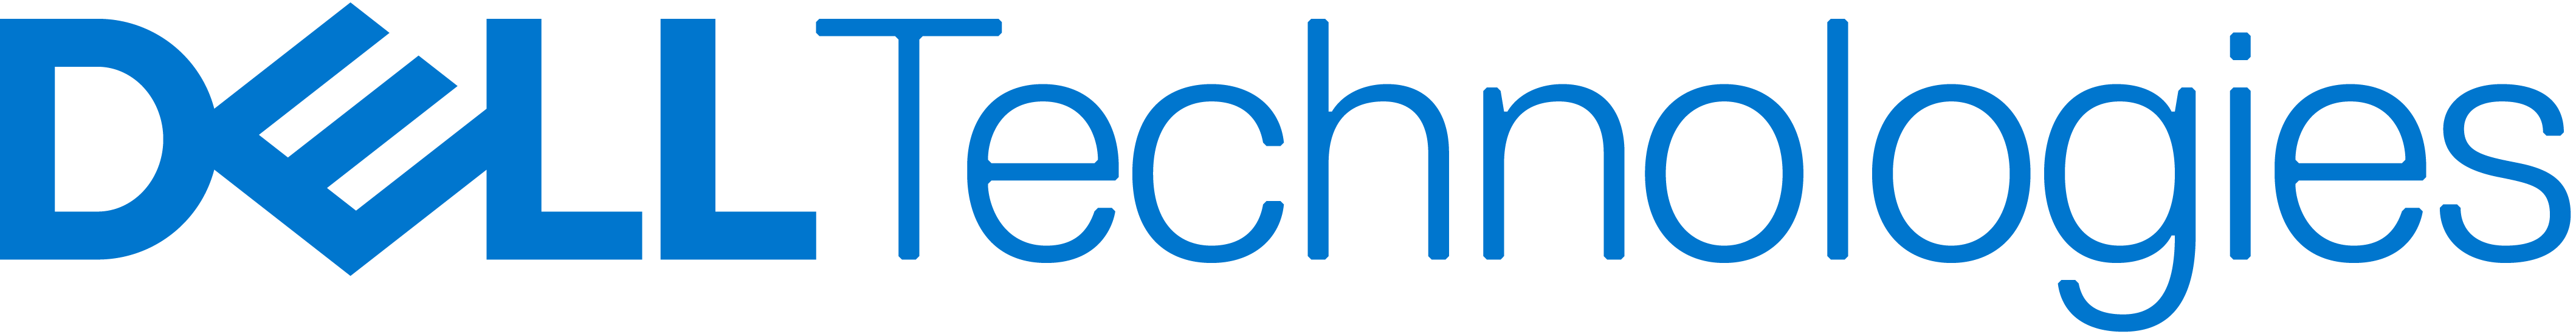 DellTech_Logo_Prm_Blue_rgb